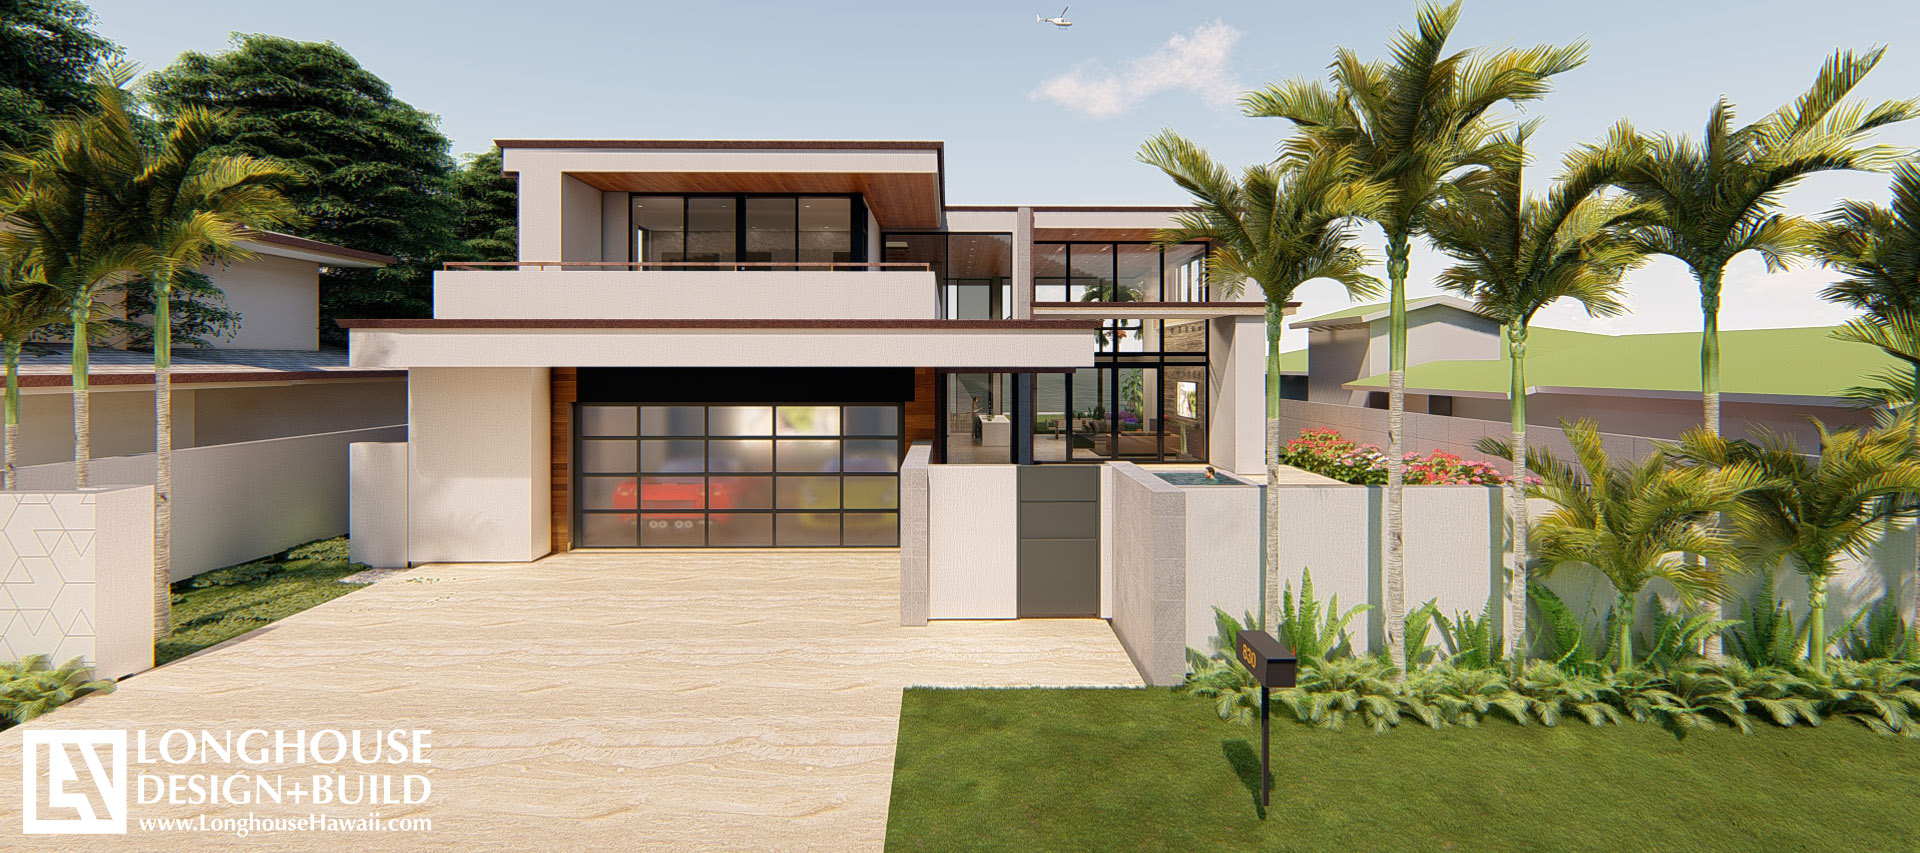 Oceanfront Design+Build+SMA Application Hawaii Architects Jeff Long Oahu Hawaii Honolulu Luxury Home builder design Build Interior CAD Rendering